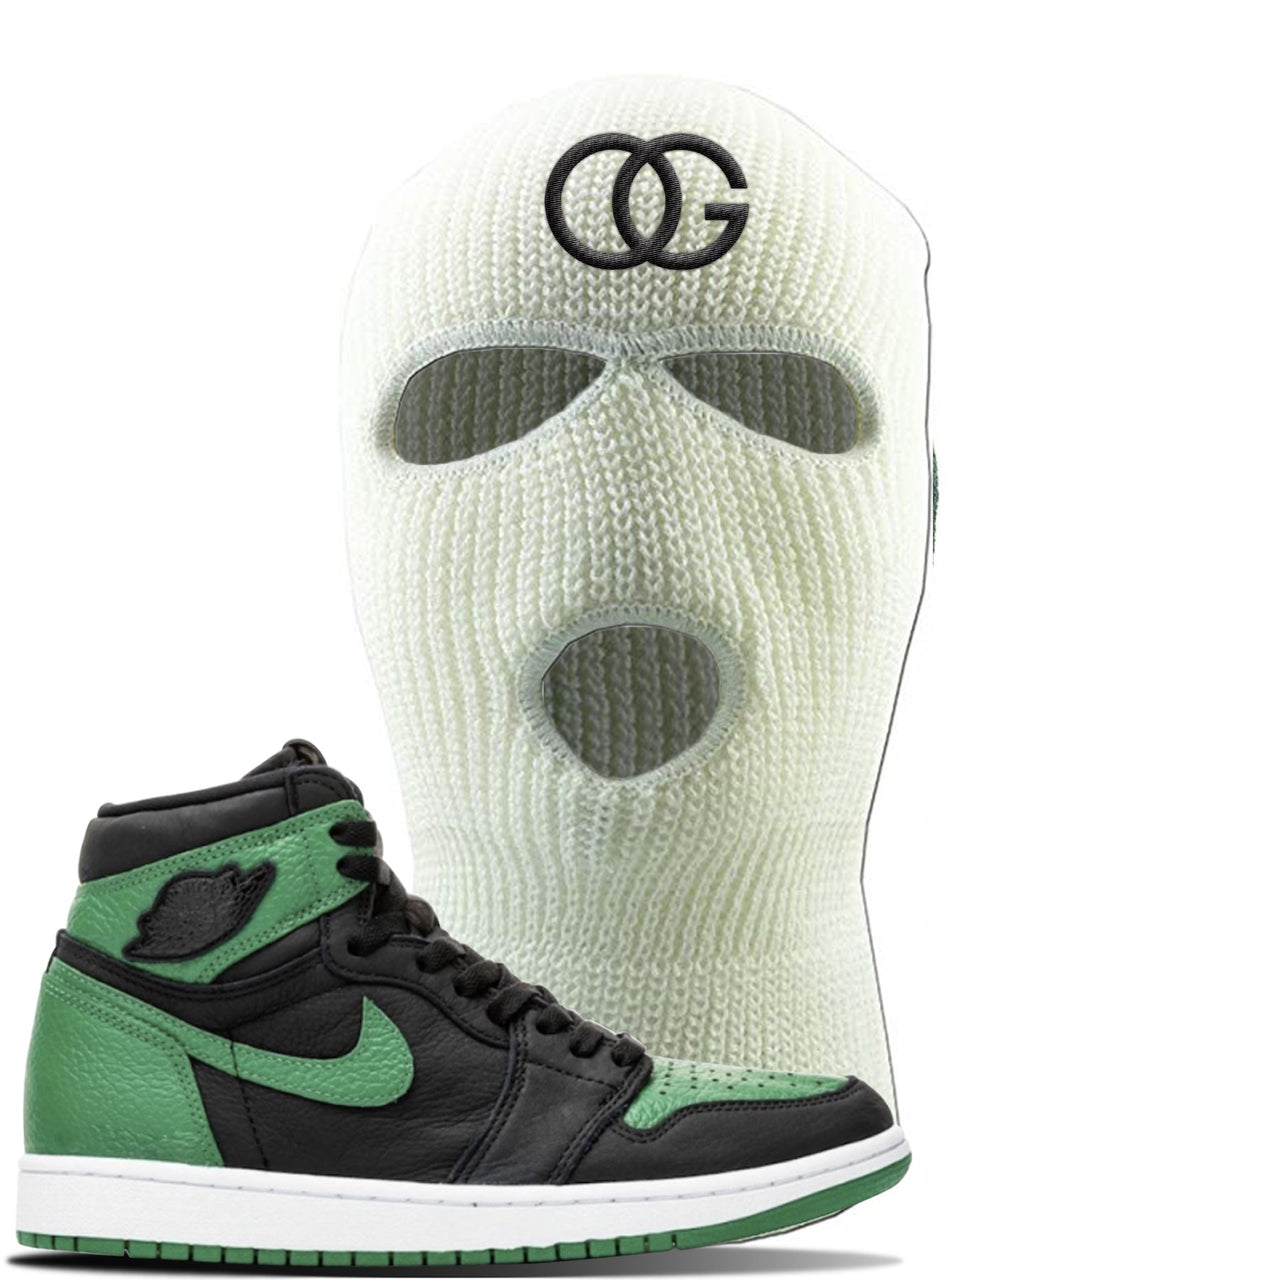 Jordan 1 Retro High OG Pine Green Gym Sneaker White Ski Mask | Hat to match Air Jordan 1 Retro High OG Pine Green Gym Shoes | OG